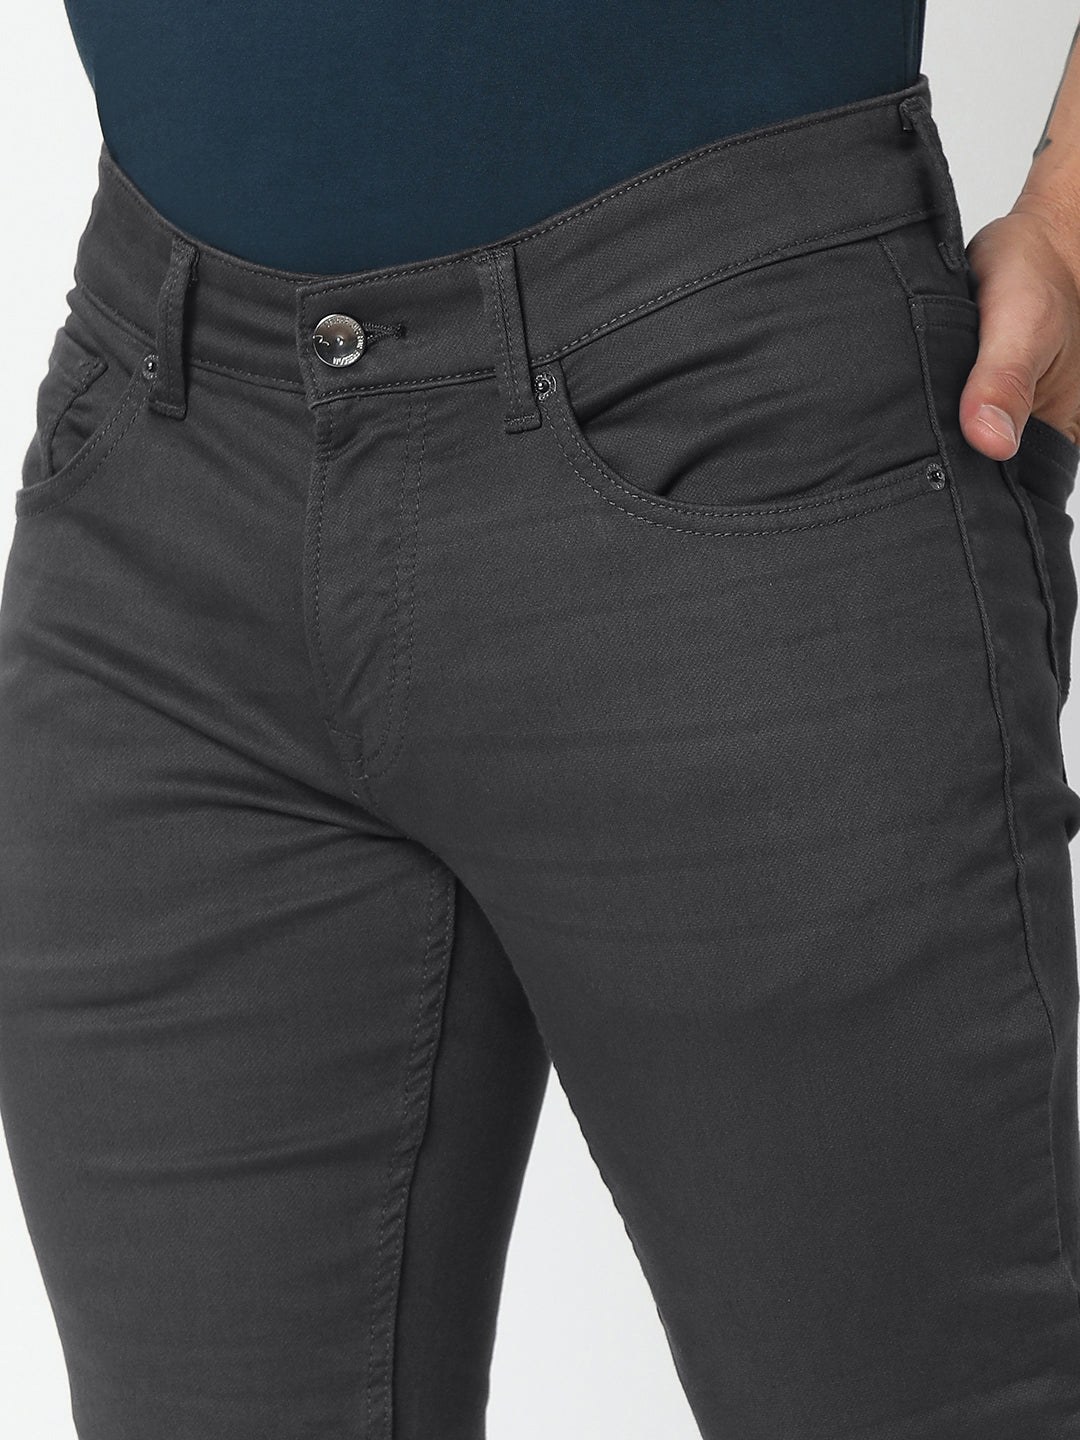 Spykar Dark Grey Cotton Slim Fit Narrow Length Jeans For Men (Skinny)